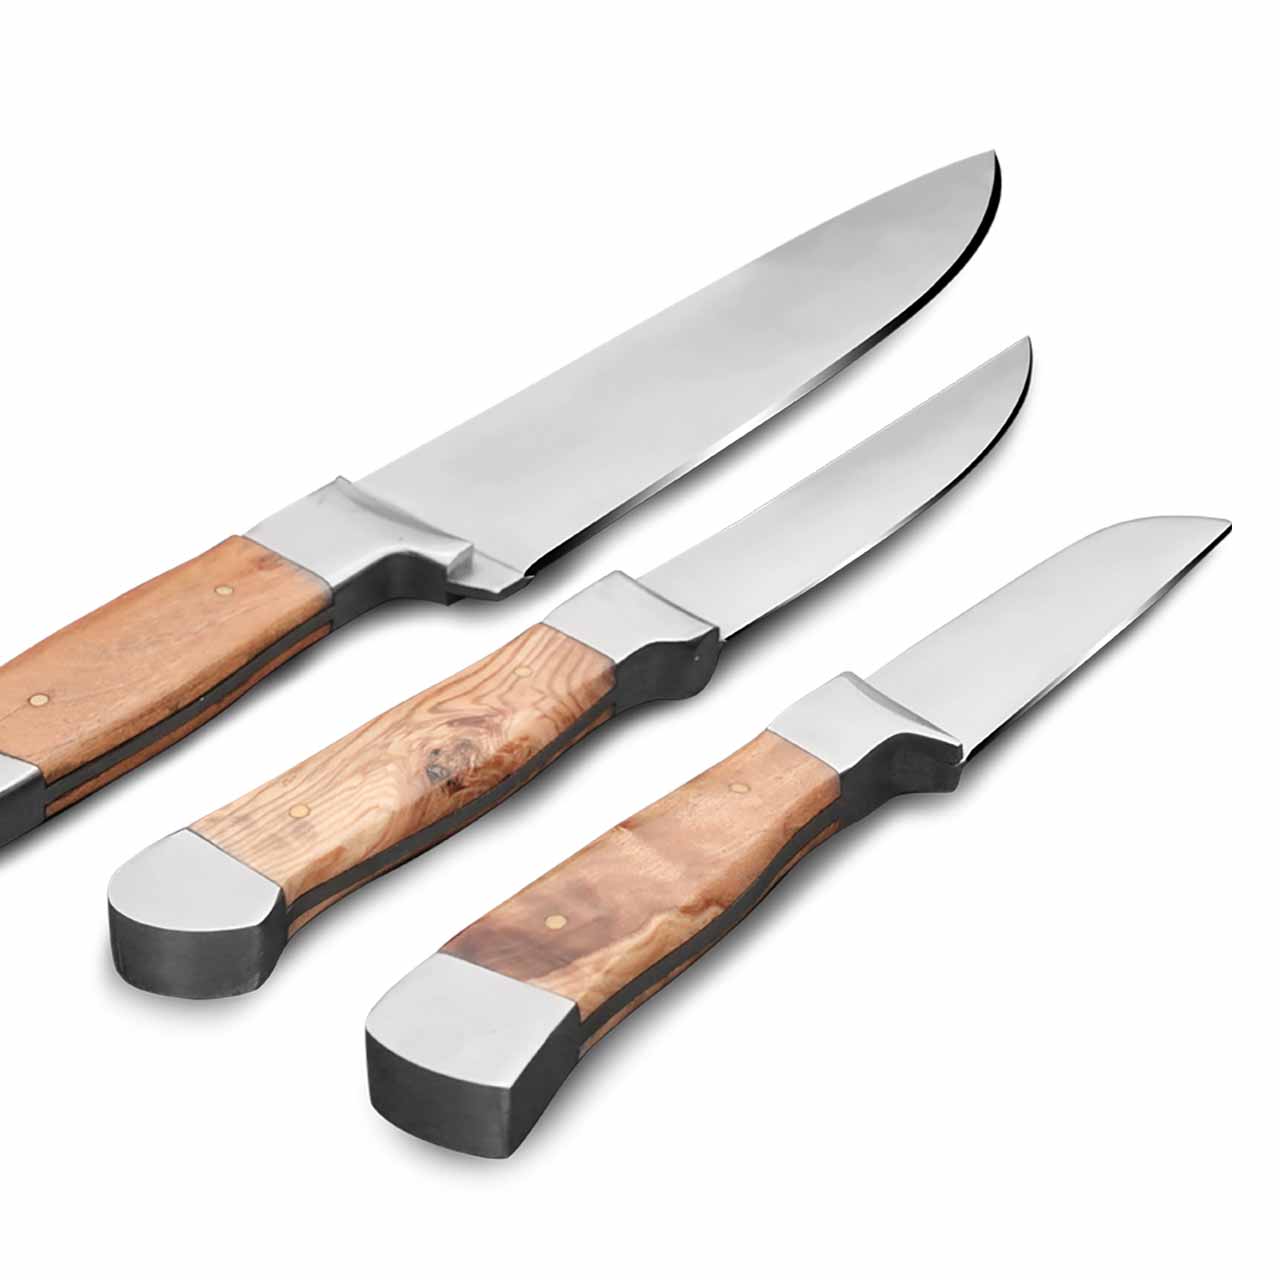 stainless steel kitchen knife set